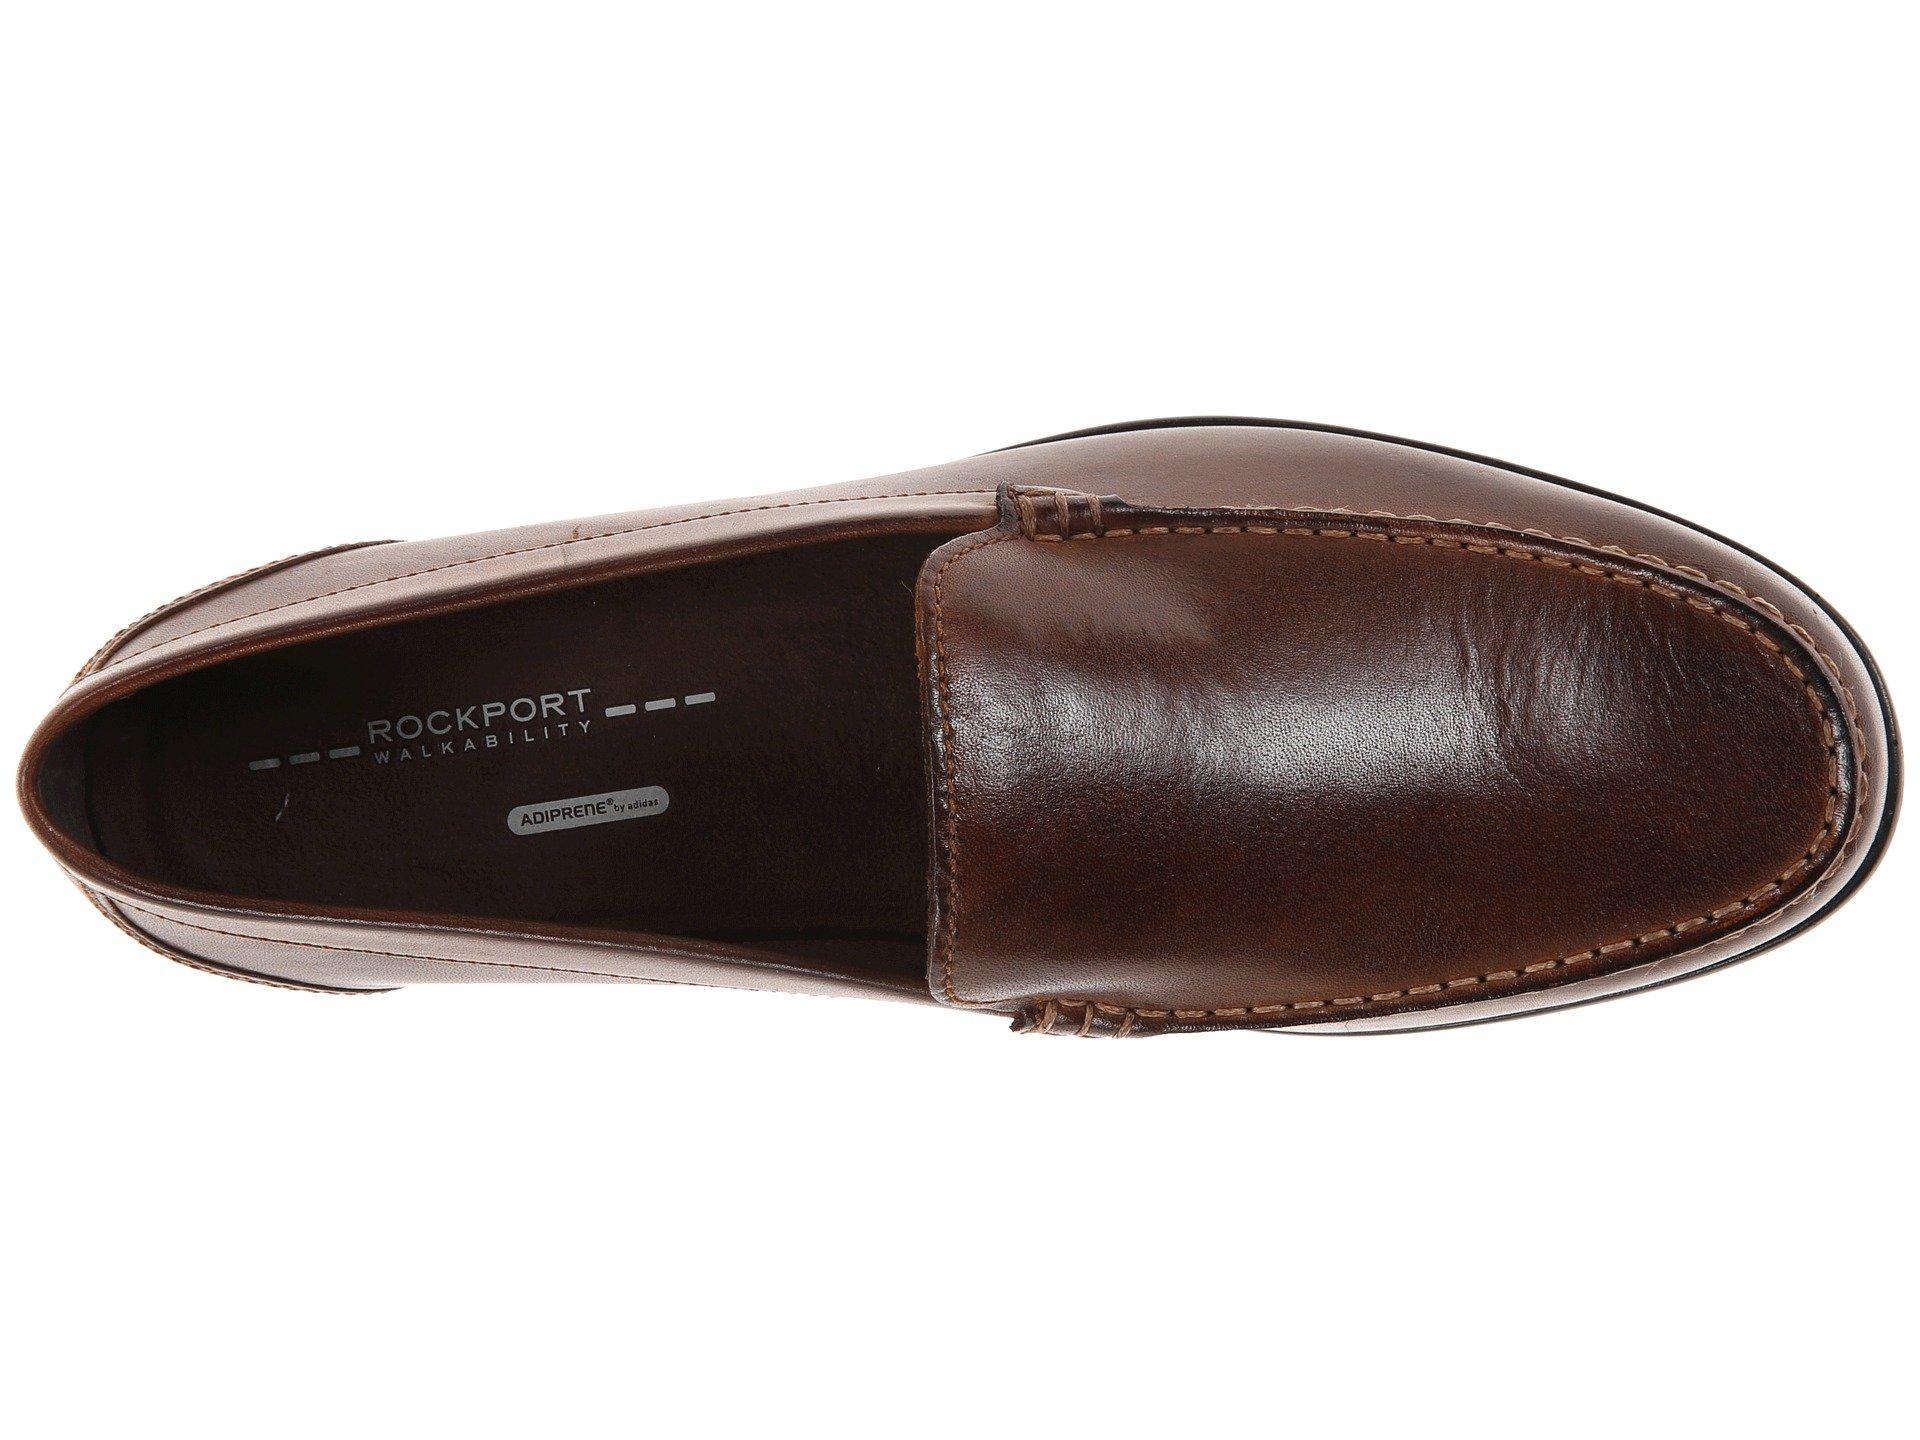 Rockport Leather Classic Lite Venetian Slip-on Loafer in Dark Brown ...